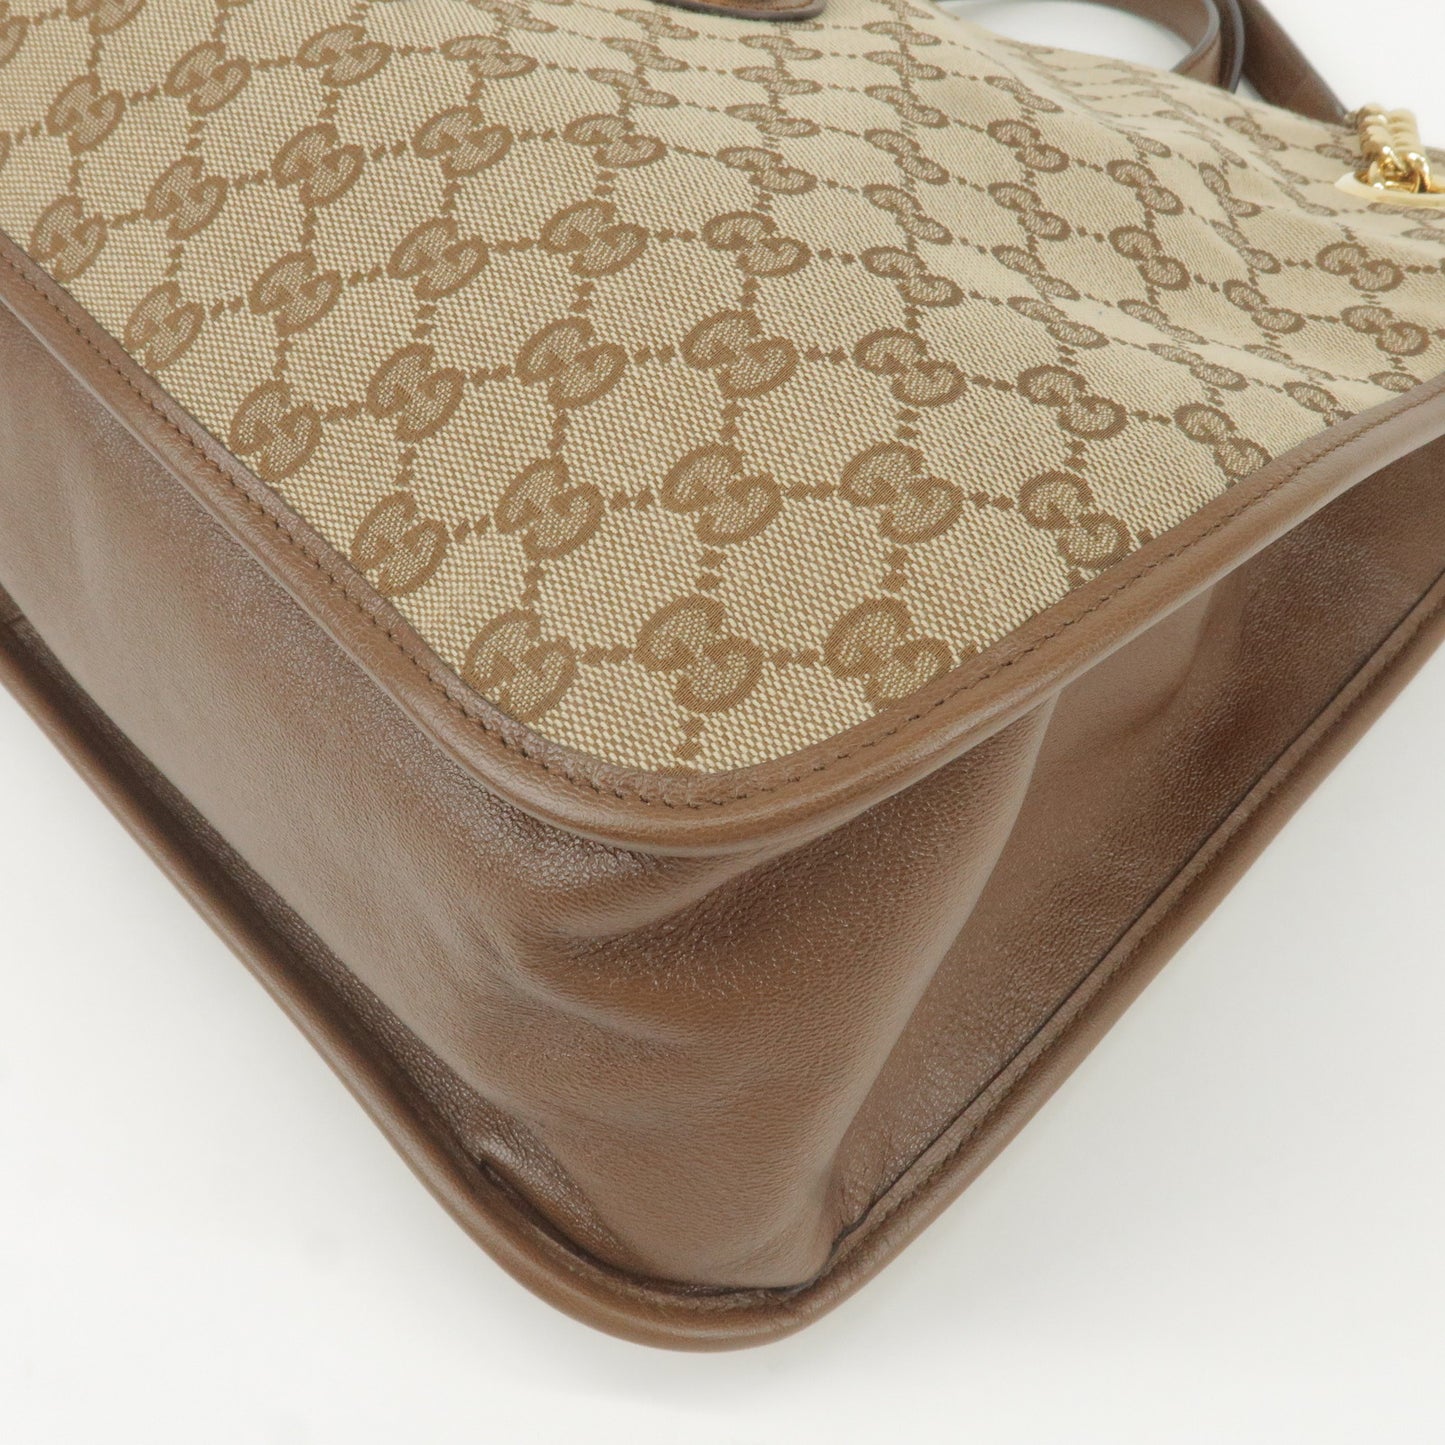 GUCCI Horsebit GG Canvas Leather 2Way Chain Shoulder Bag 623695